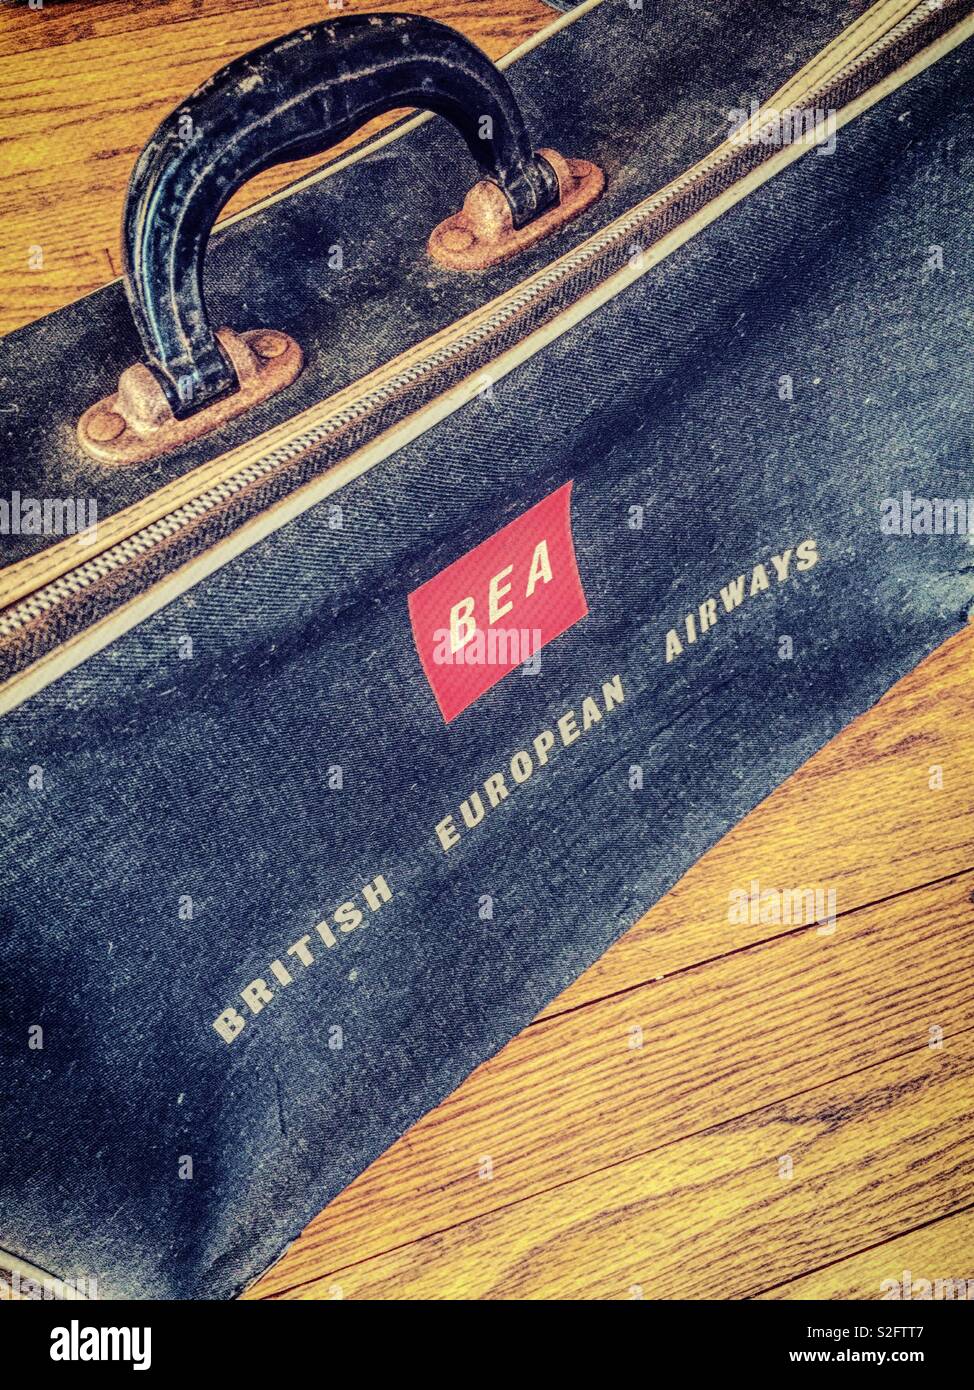 Vintage British European airways fabric suitcase Stock Photo